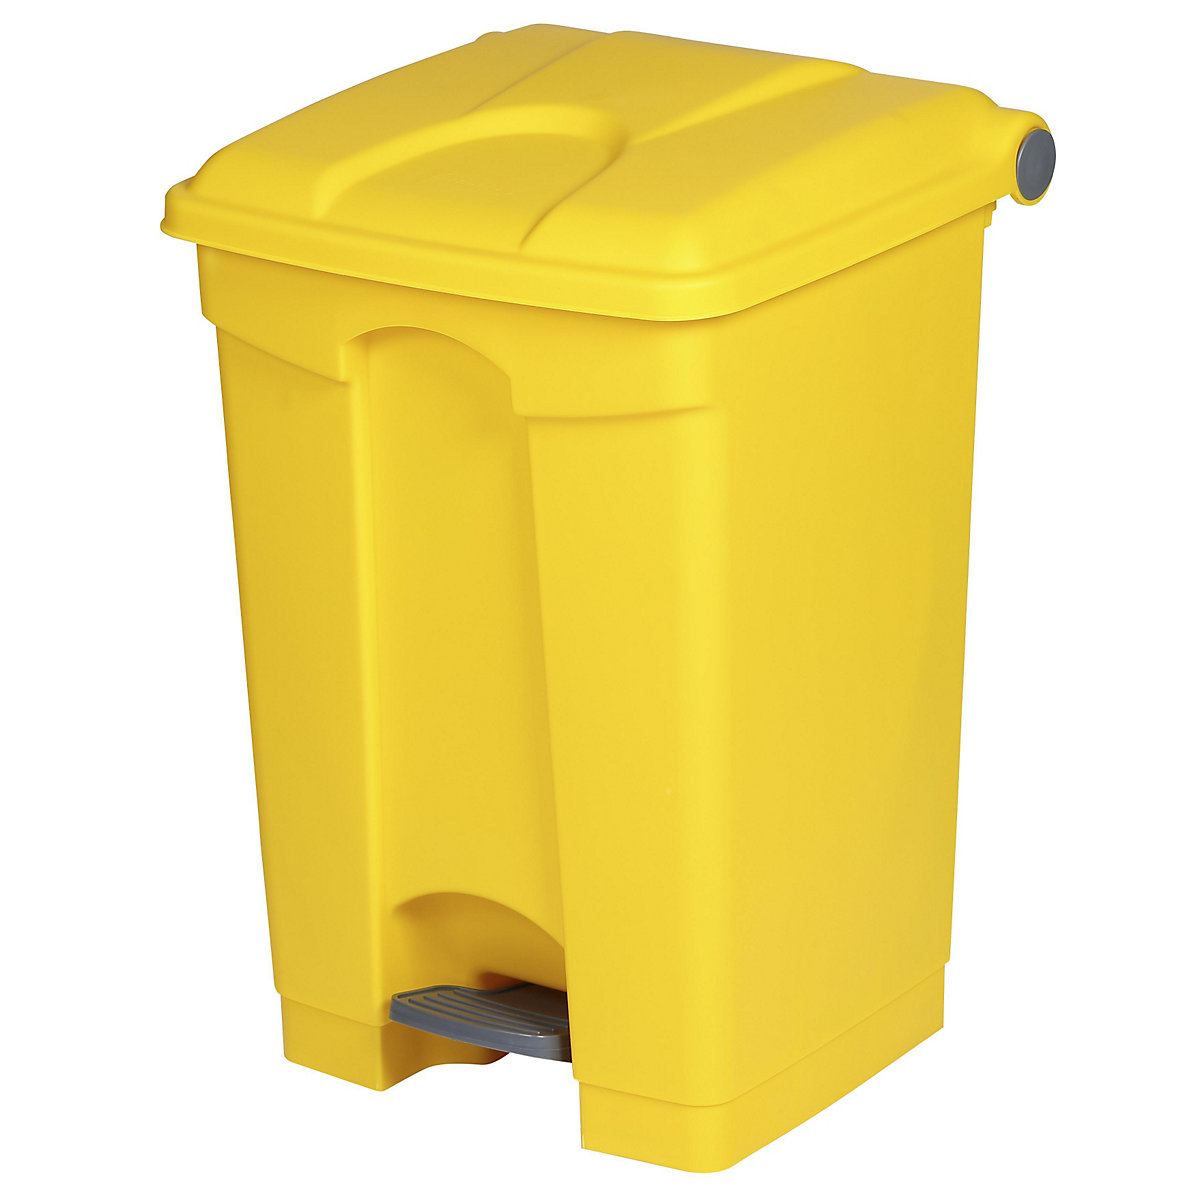 EUROKRAFTbasic – Pedal waste collector, capacity 45 l, WxHxD 410 x 600 x 400 mm, yellow